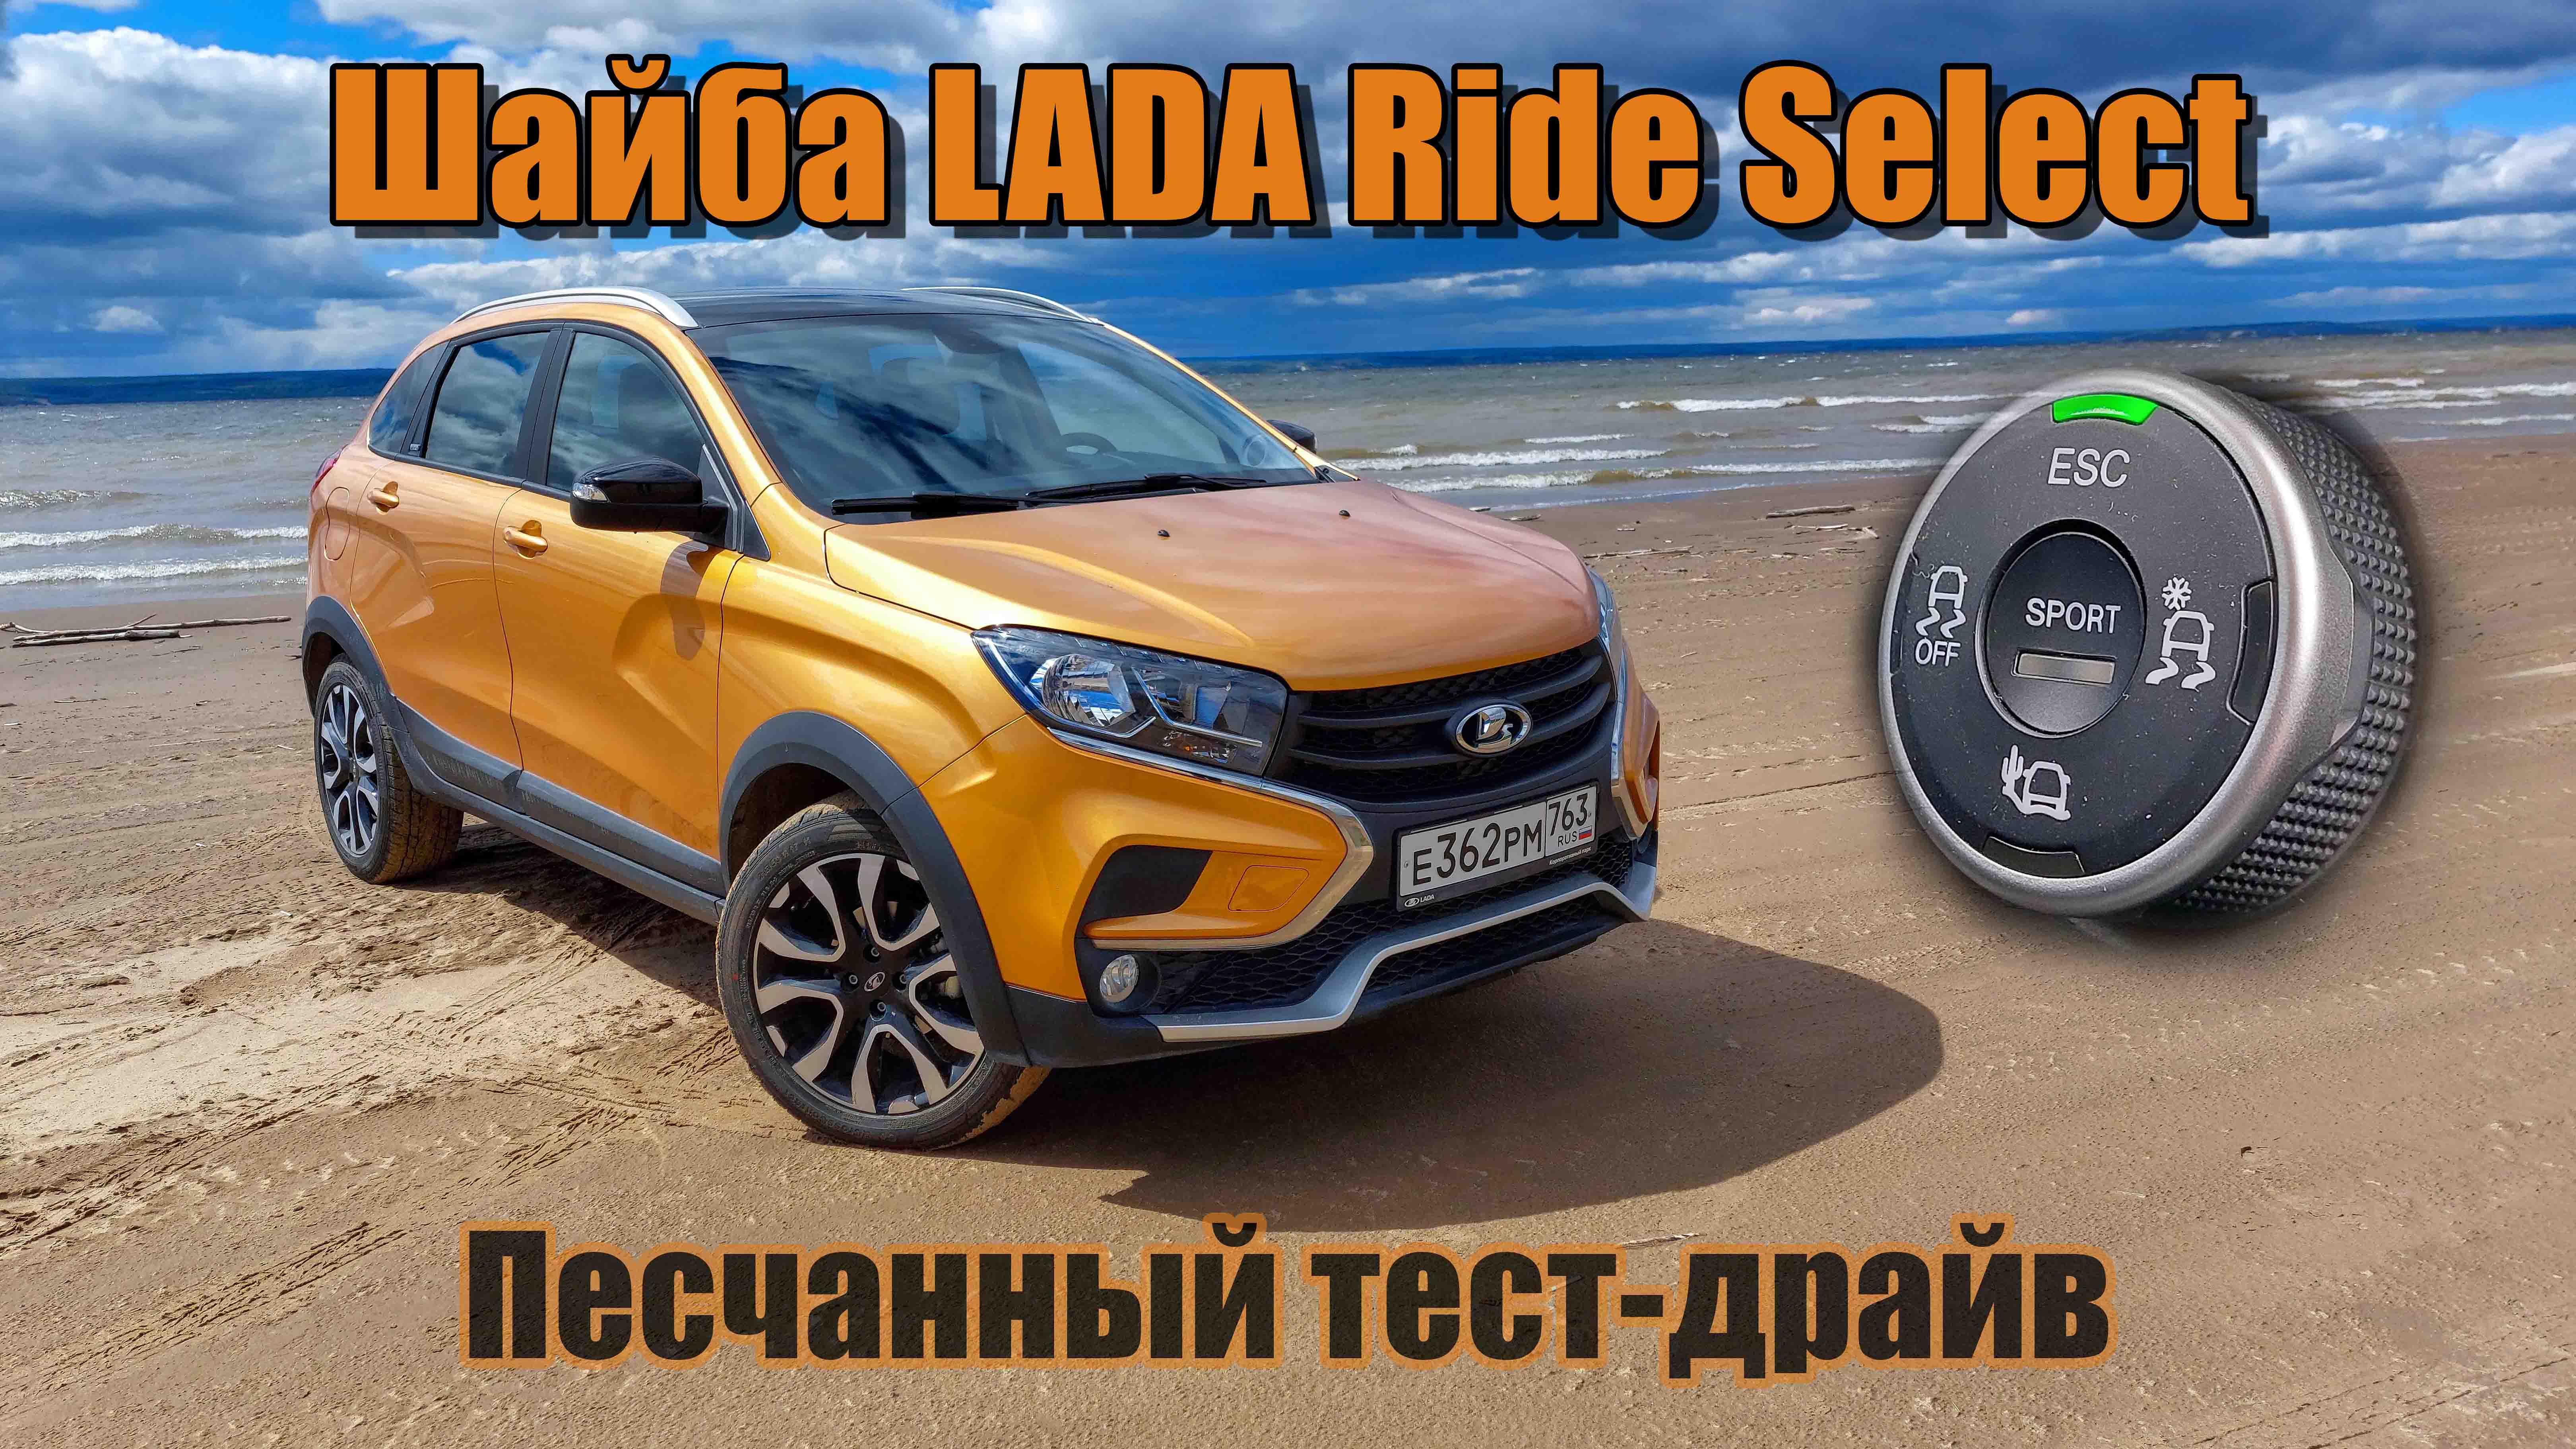 XRAY Cross и песчаный тест системы LADA Ride select